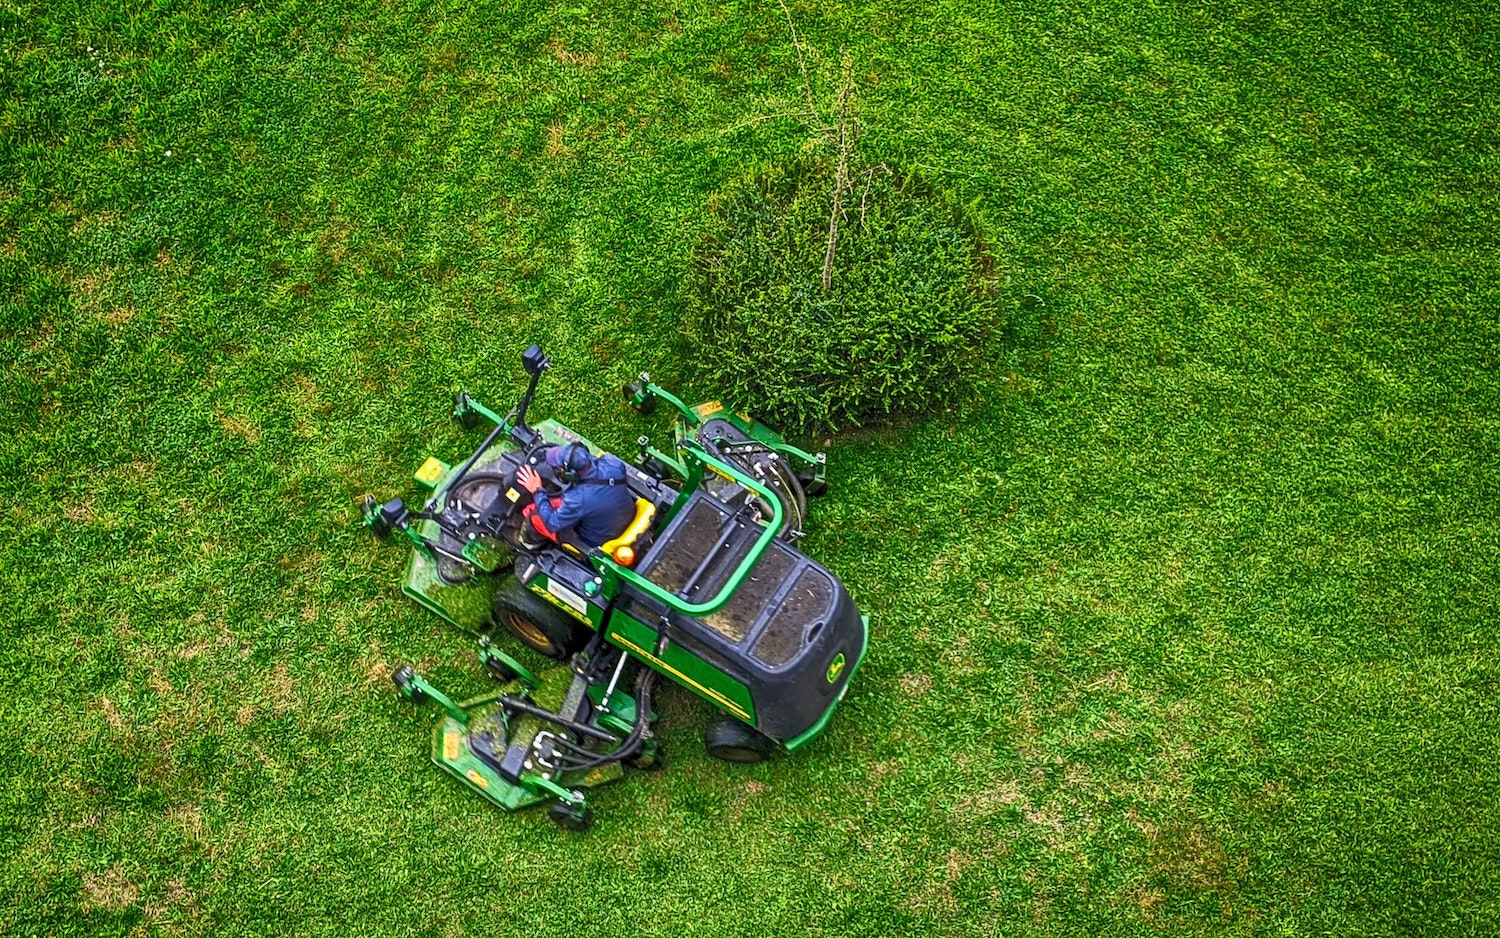 A man mows grass on his John Deere ride-on lawn mower.